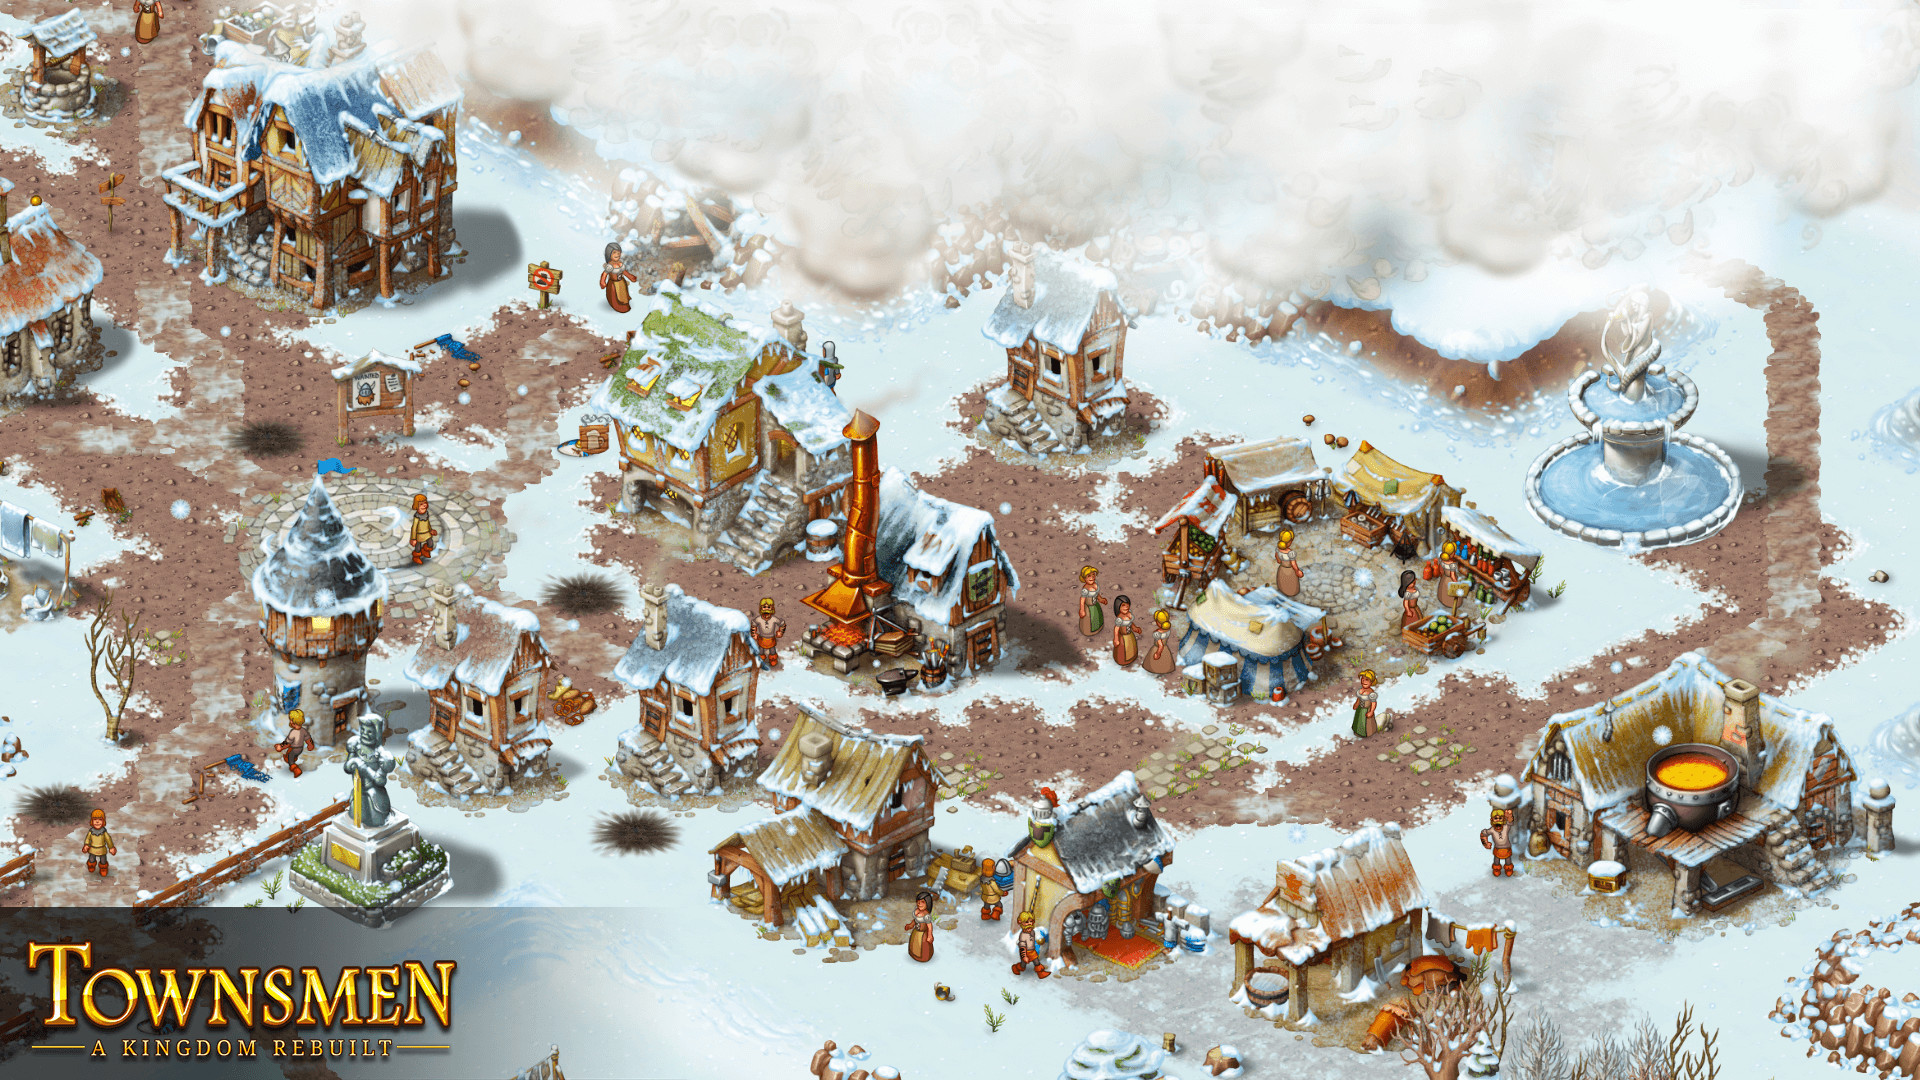 [$ 5.64] Townsmen - A Kingdom Rebuilt Complete Edition Steam CD Key